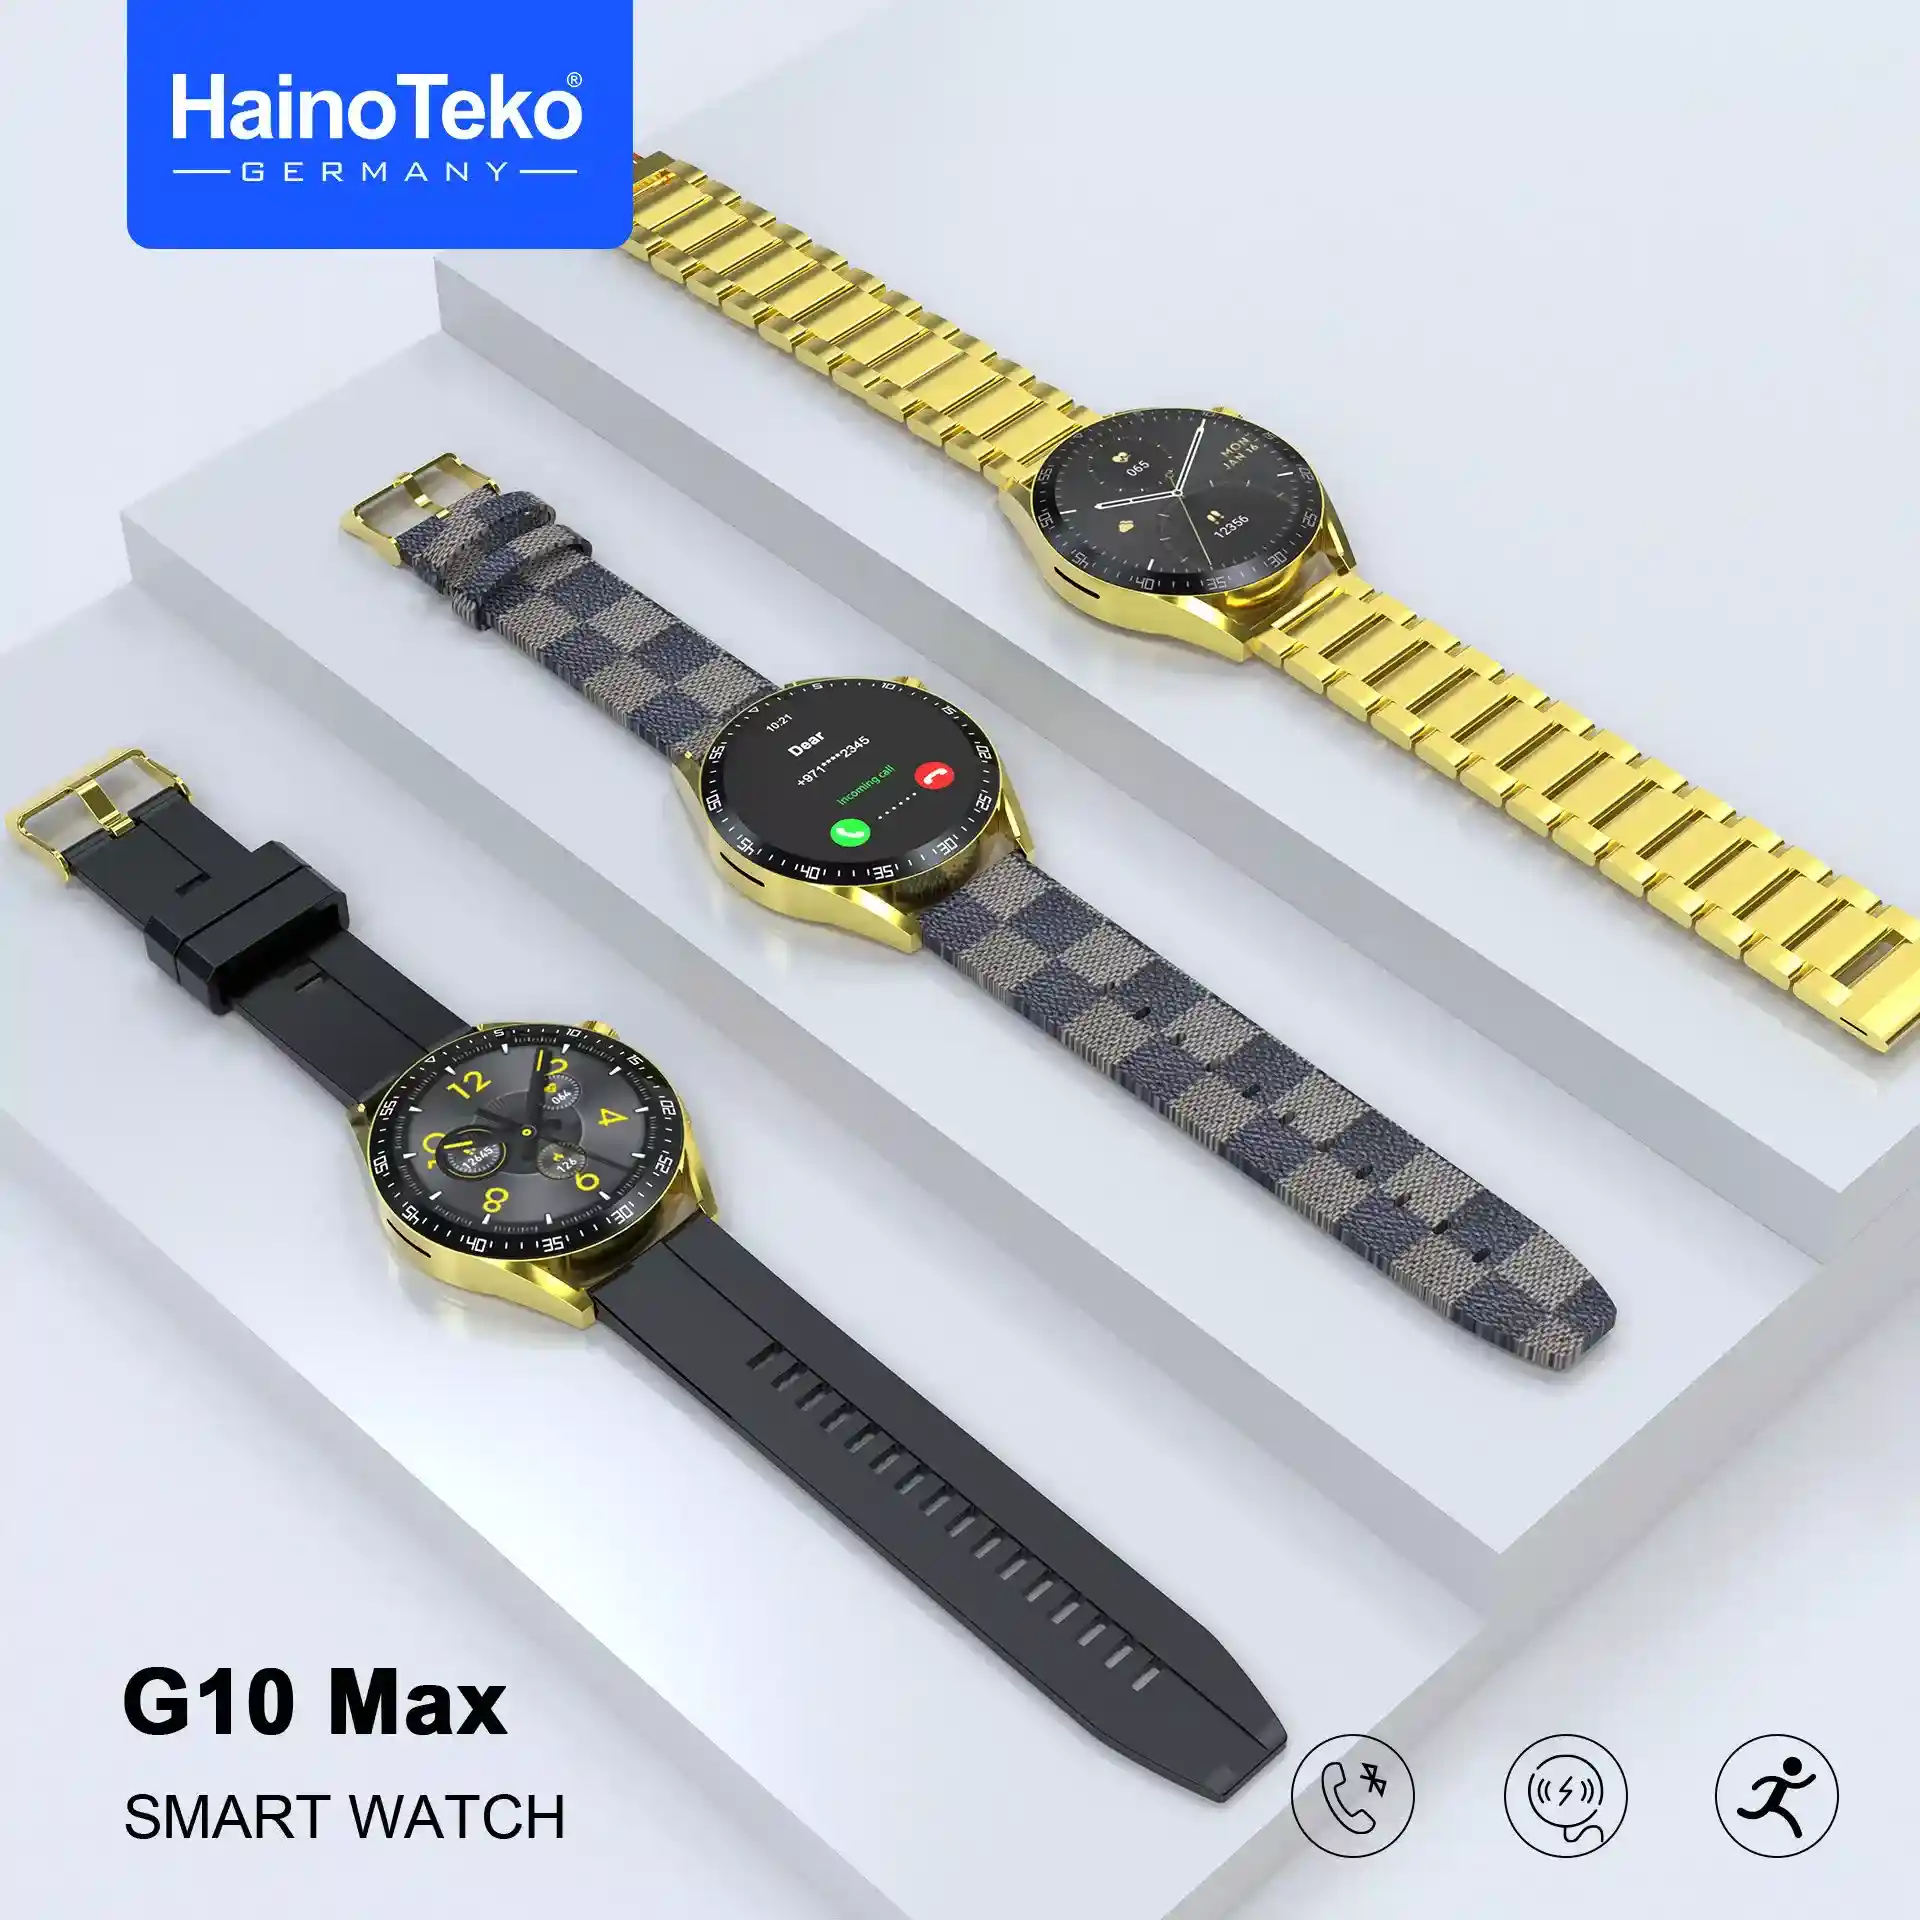 Buy G10 max Smart Watch at best price in Pakistan | Rhizmall.pk